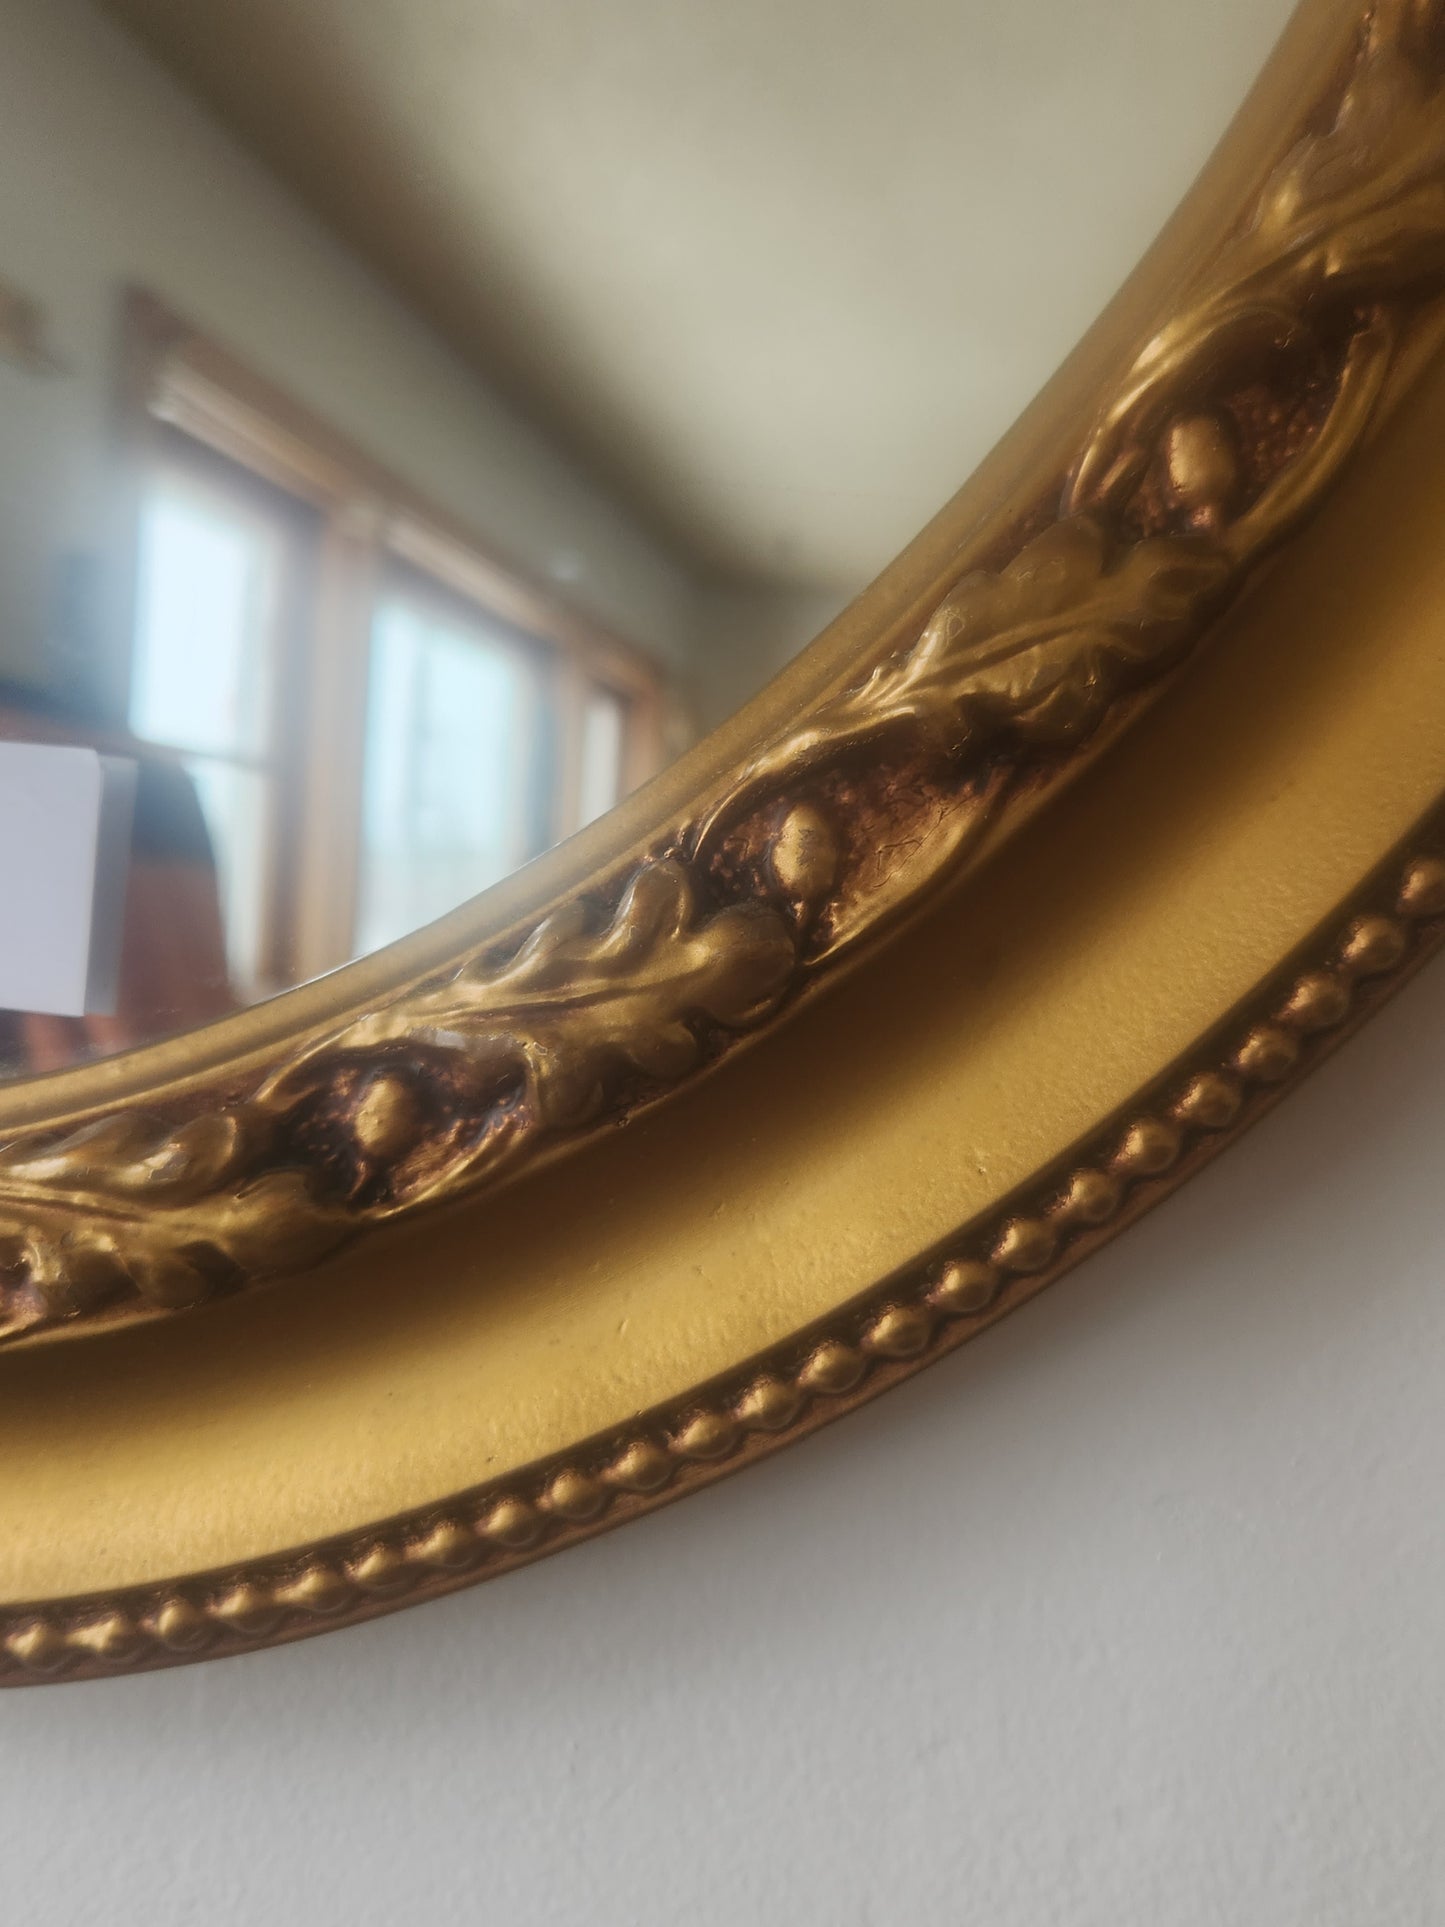 Simple Gold Oval Vintage Mirror